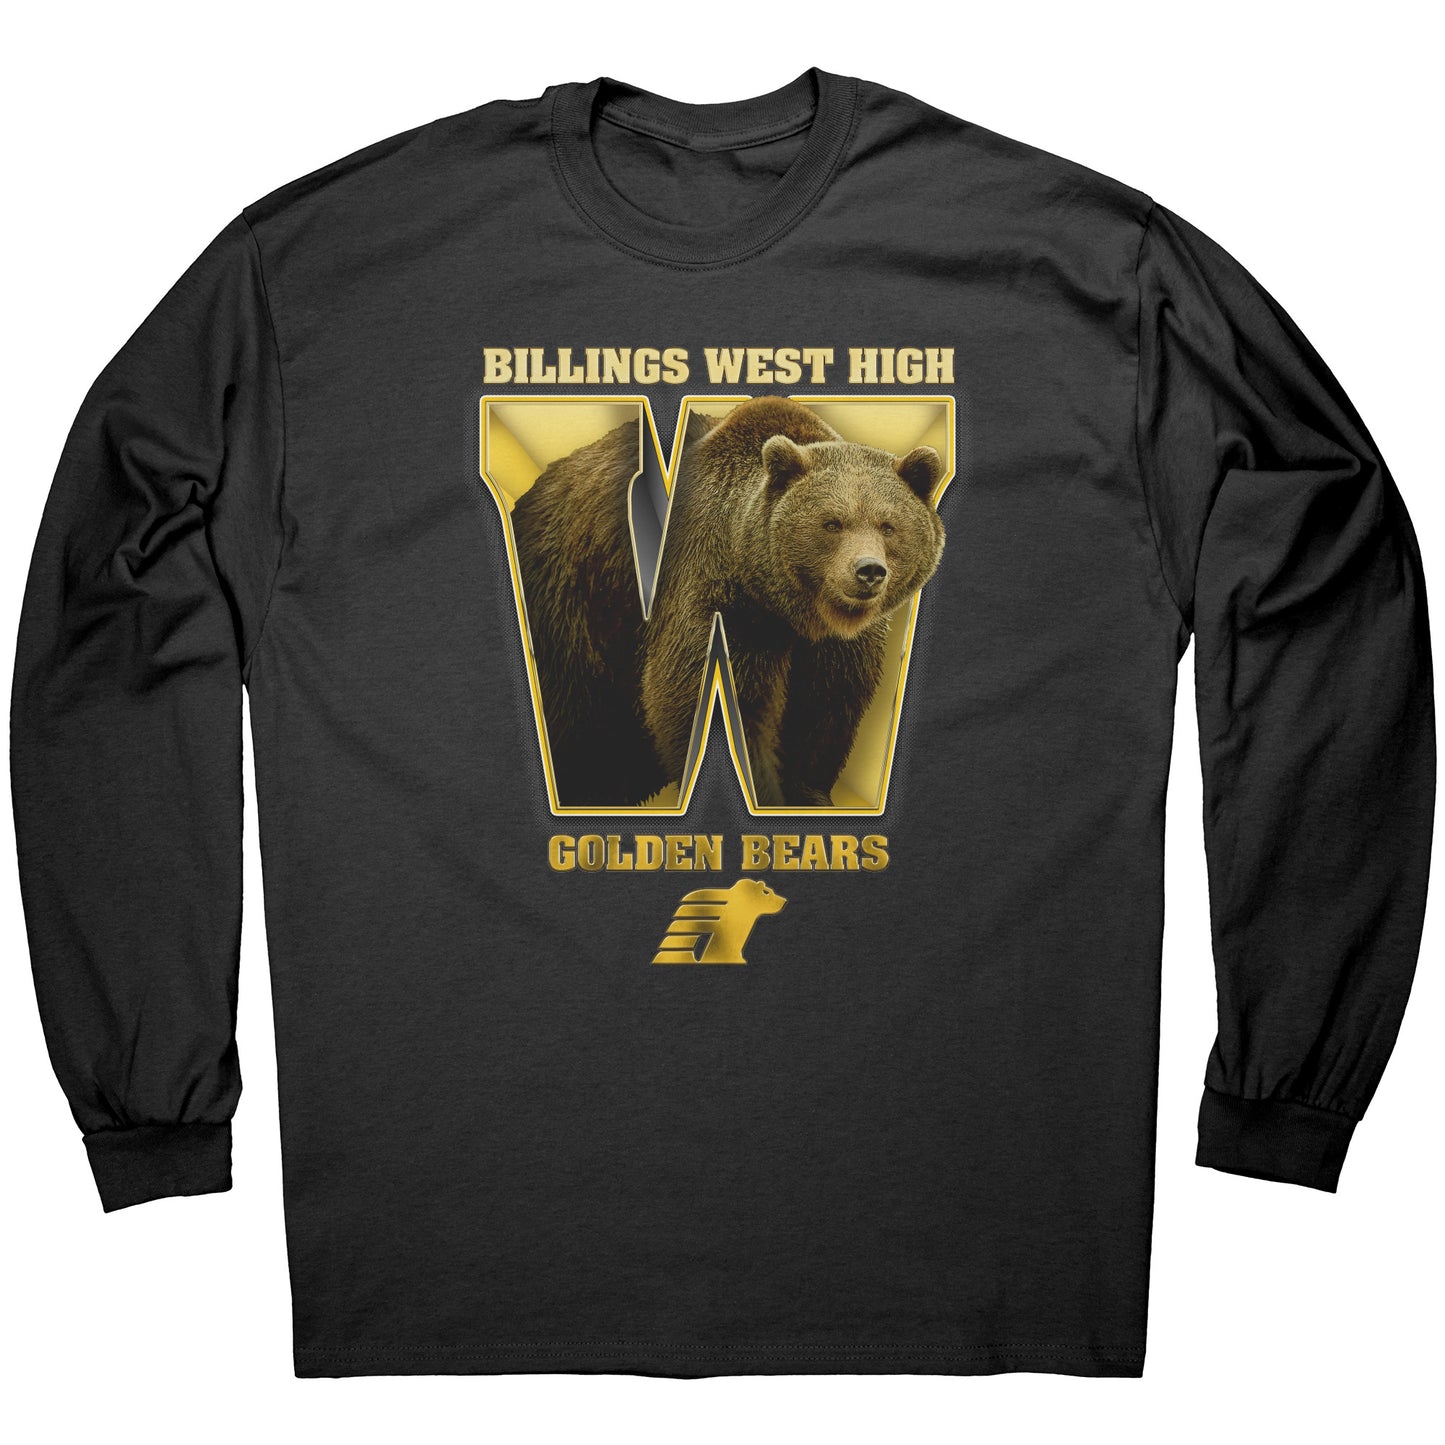 BWHS Long Sleeve Tee - Golden Bears Inside